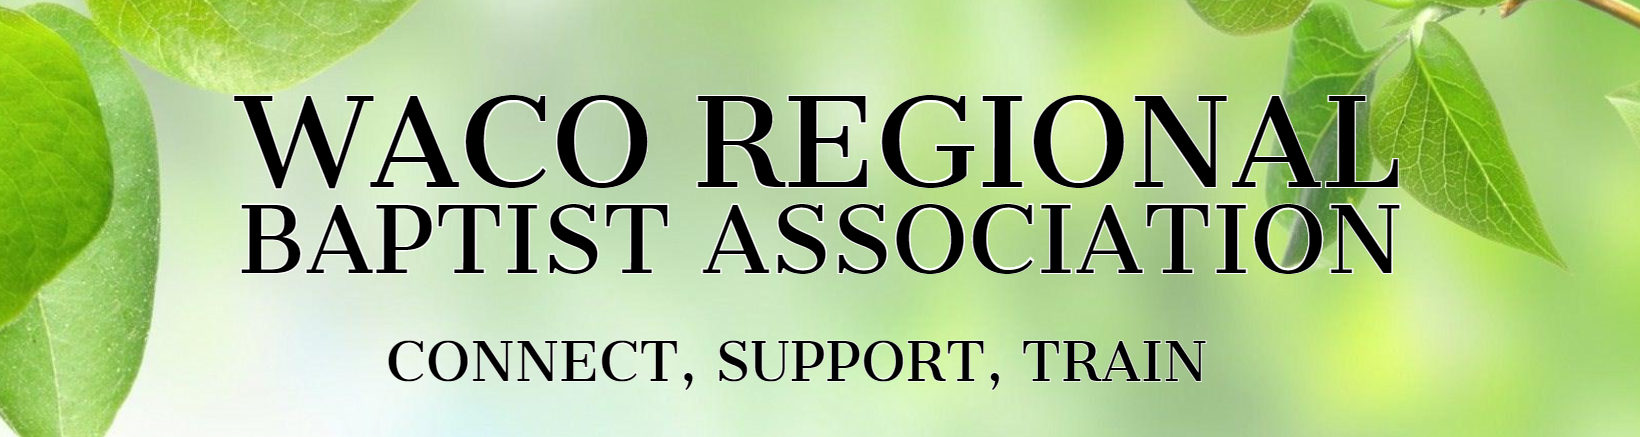 Waco Regional Baptist Association